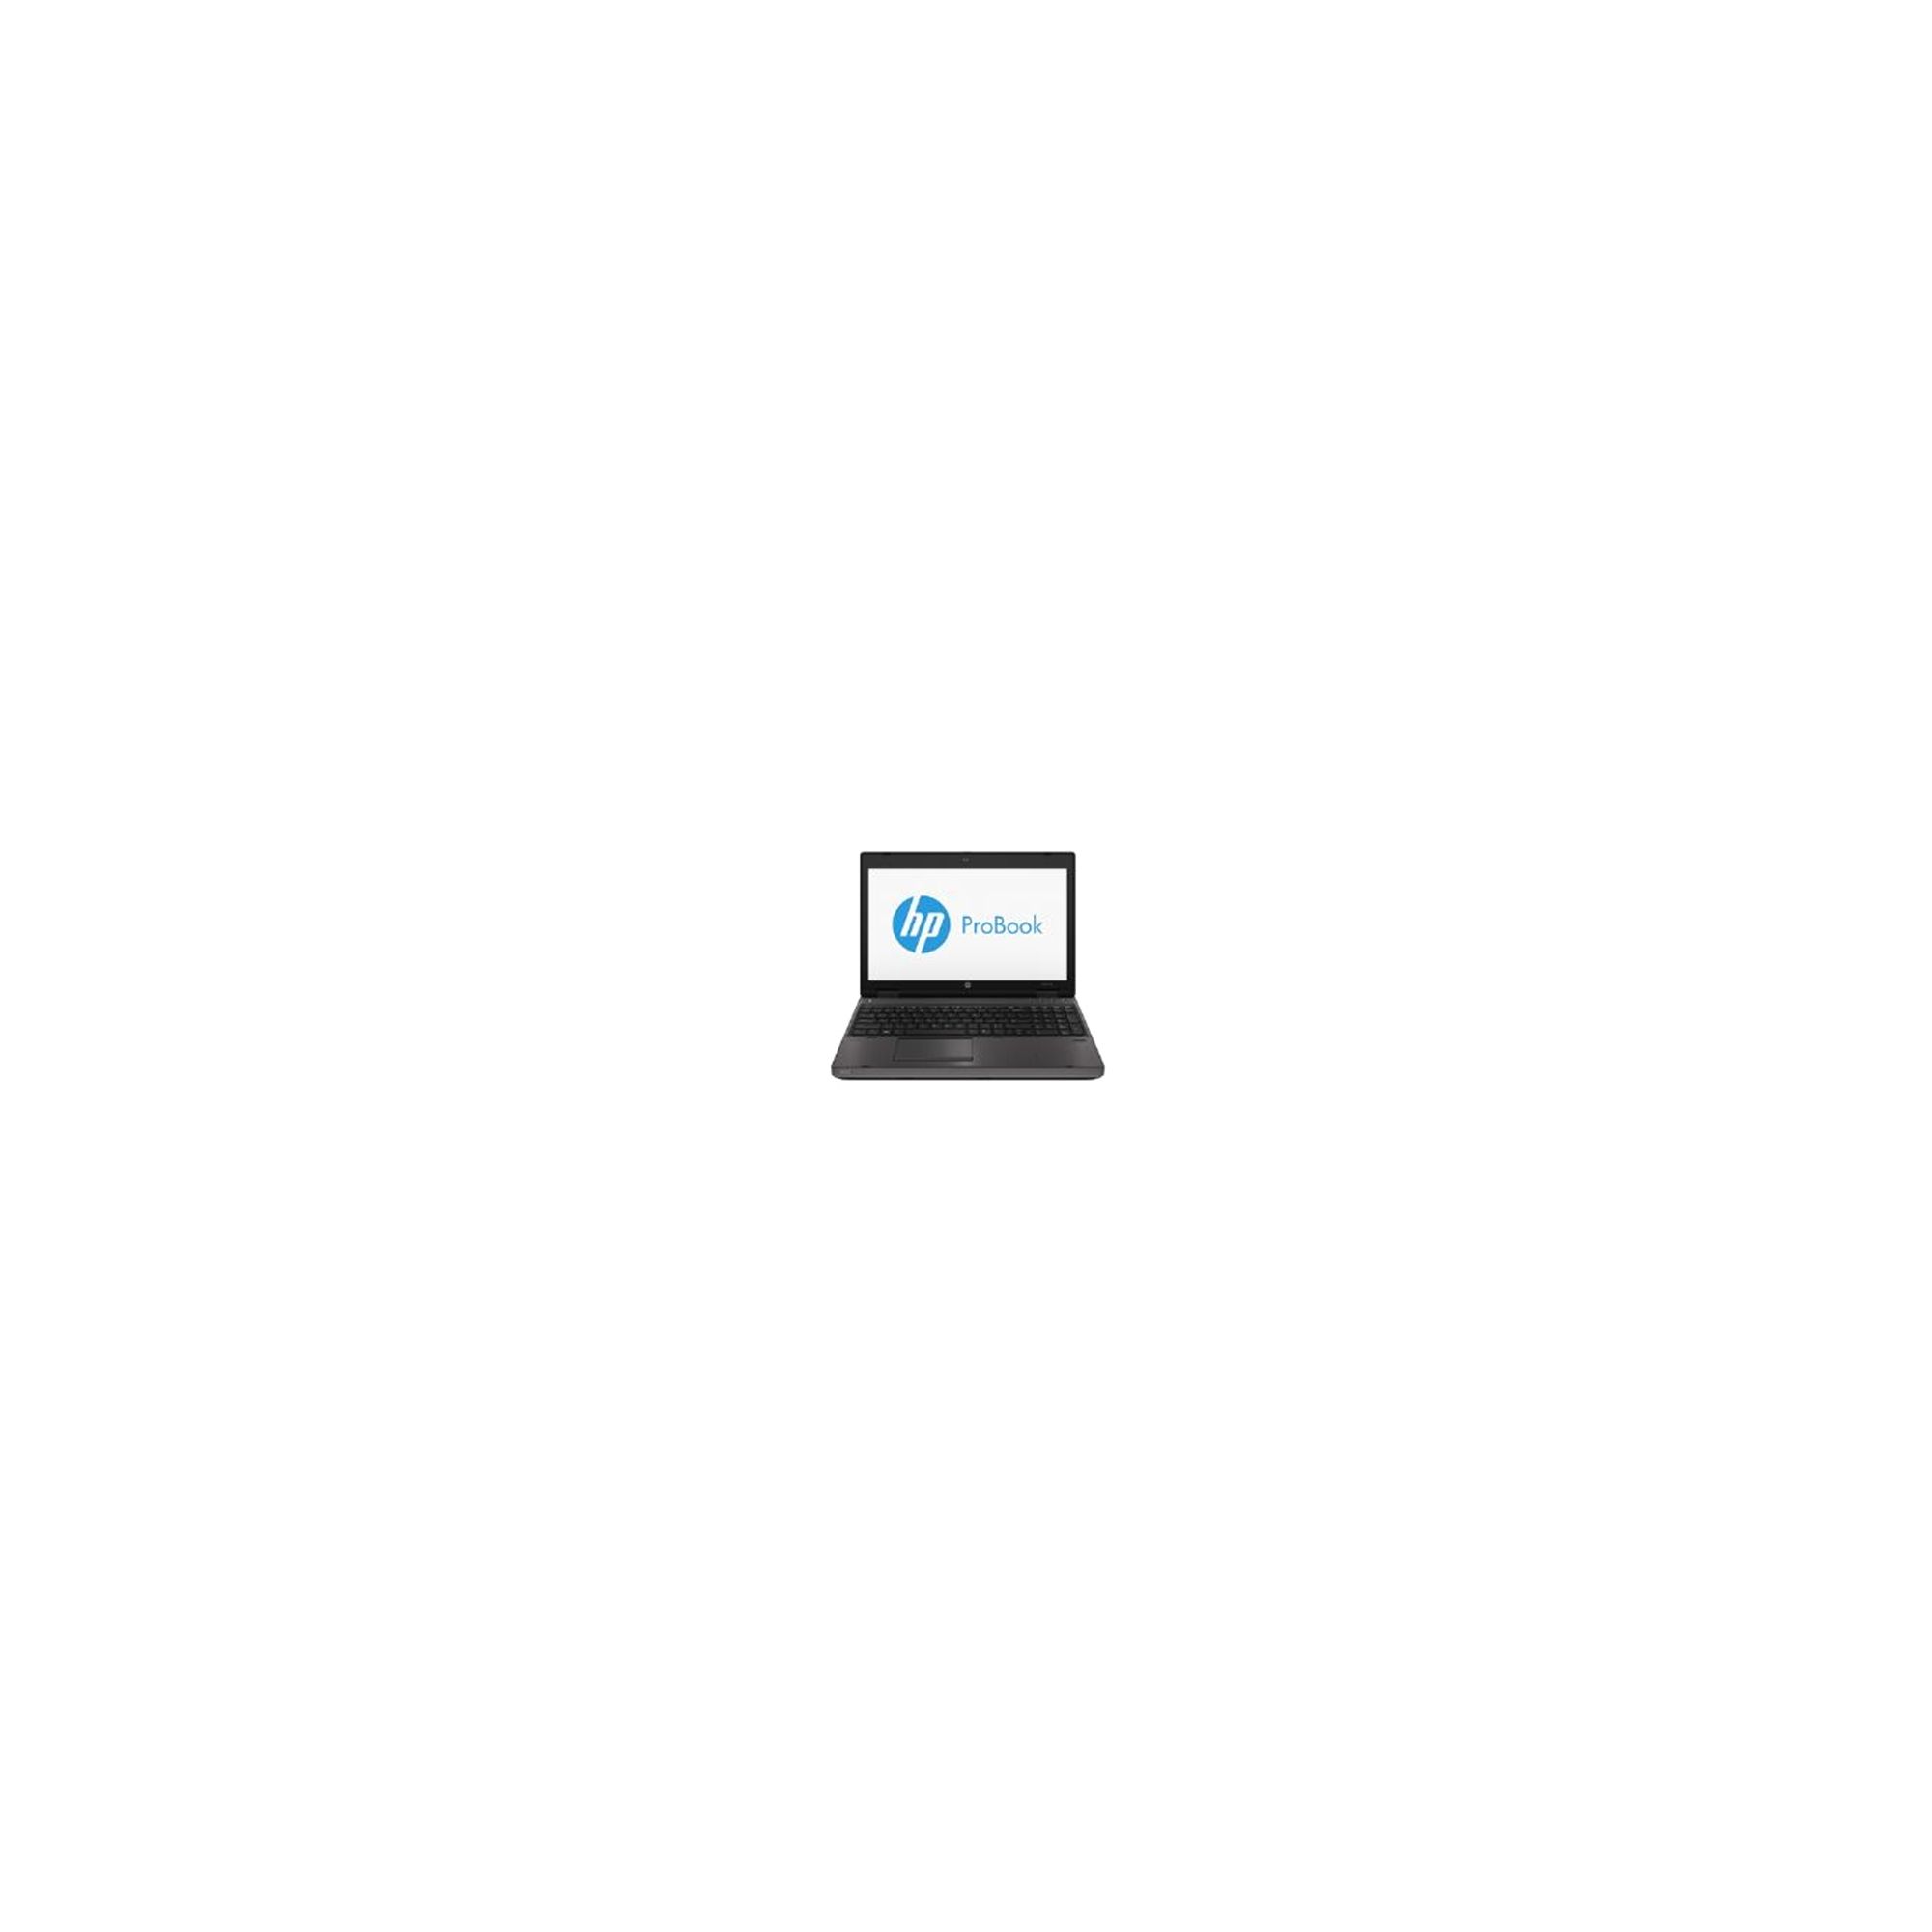 HP ProBook 6570b (15.6 inch) Notebook Core i5 (3320M) 2.6GHz 4GB 500GB DVD±RW SM DL WLAN BT WWAN Webcam Windows 7 Pro 64-bit (Intel HD Graphics)